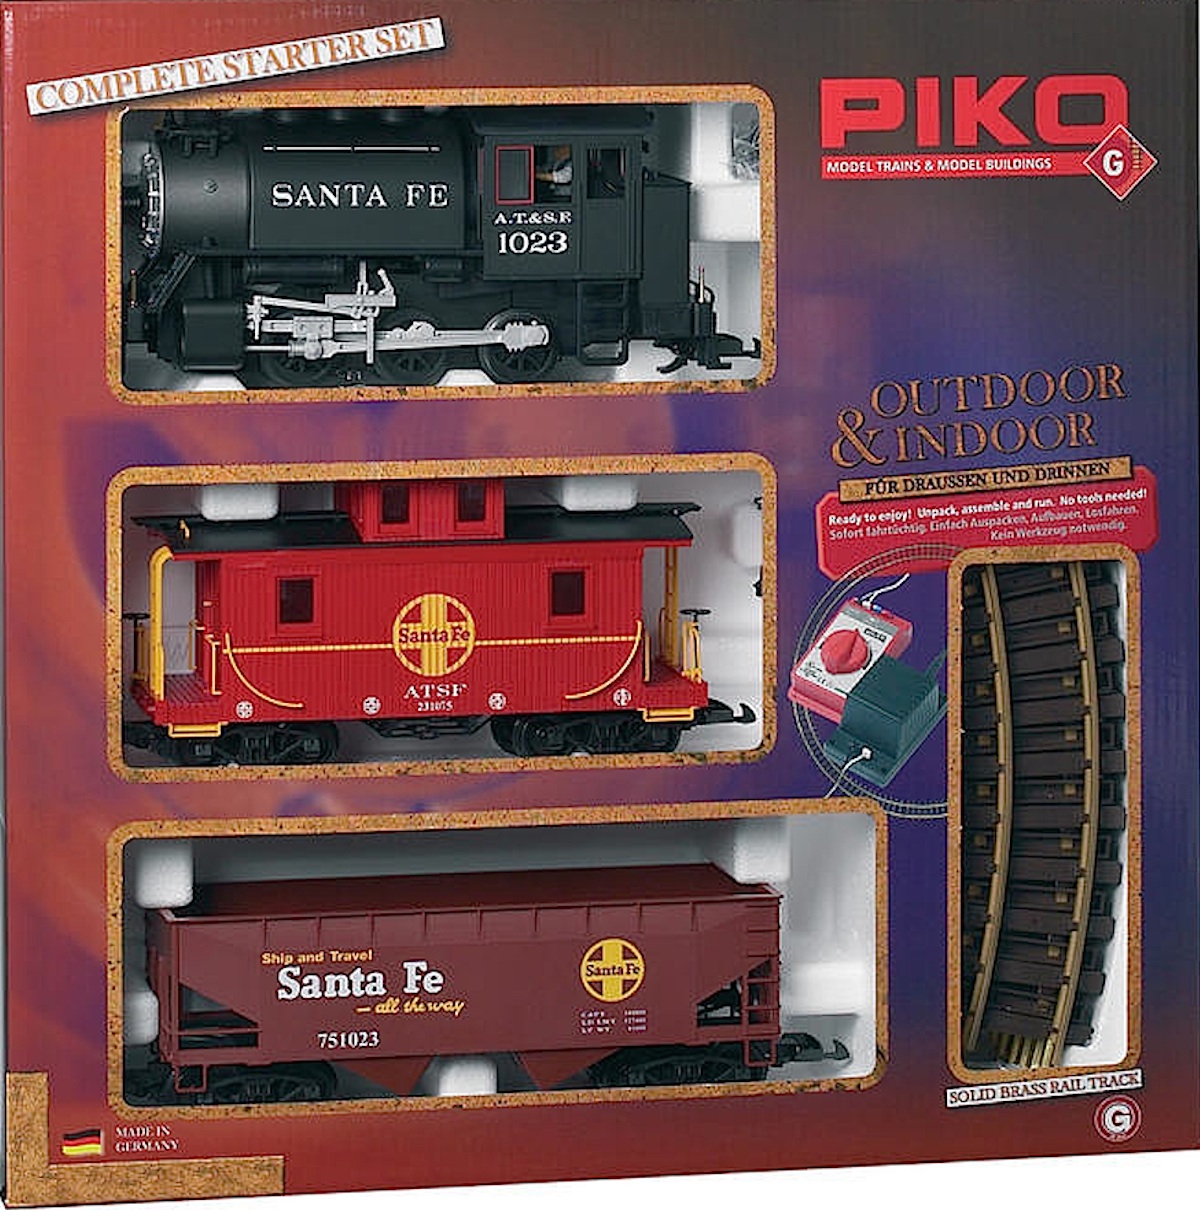 Santa Fe Güterzug (Freight train)